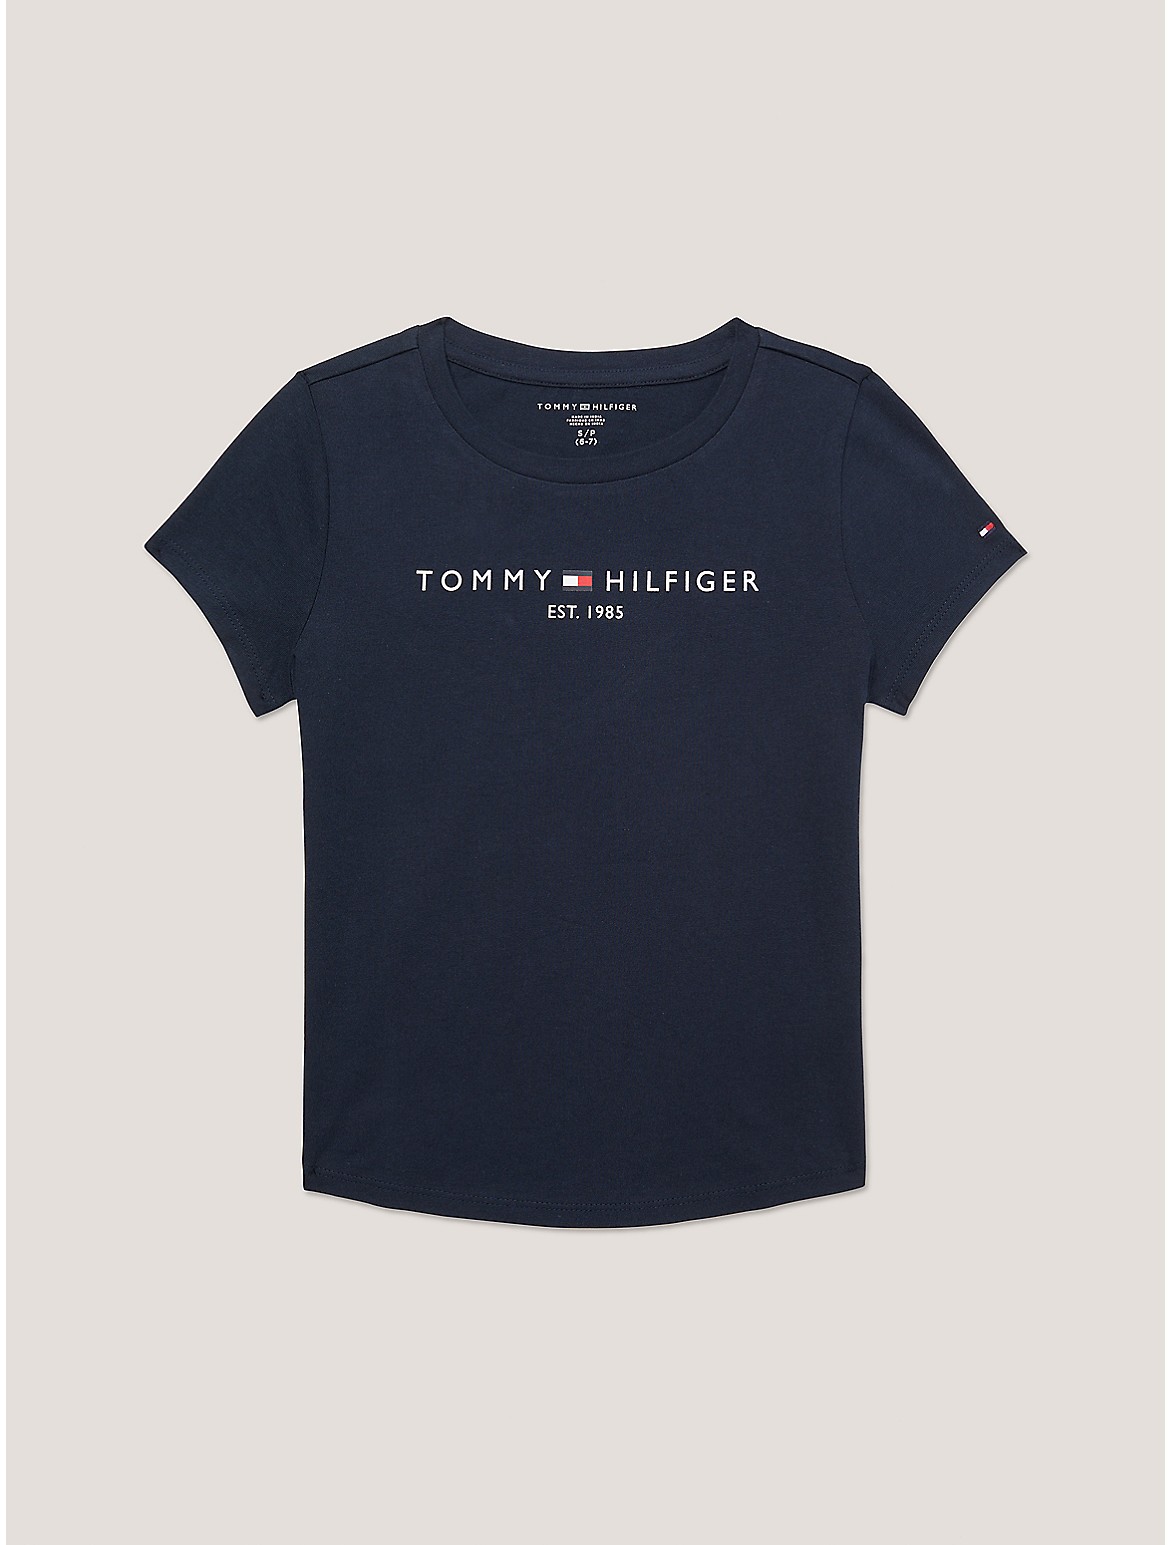 Tommy Hilfiger Girls' Kids' Hilfiger Logo T-Shirt